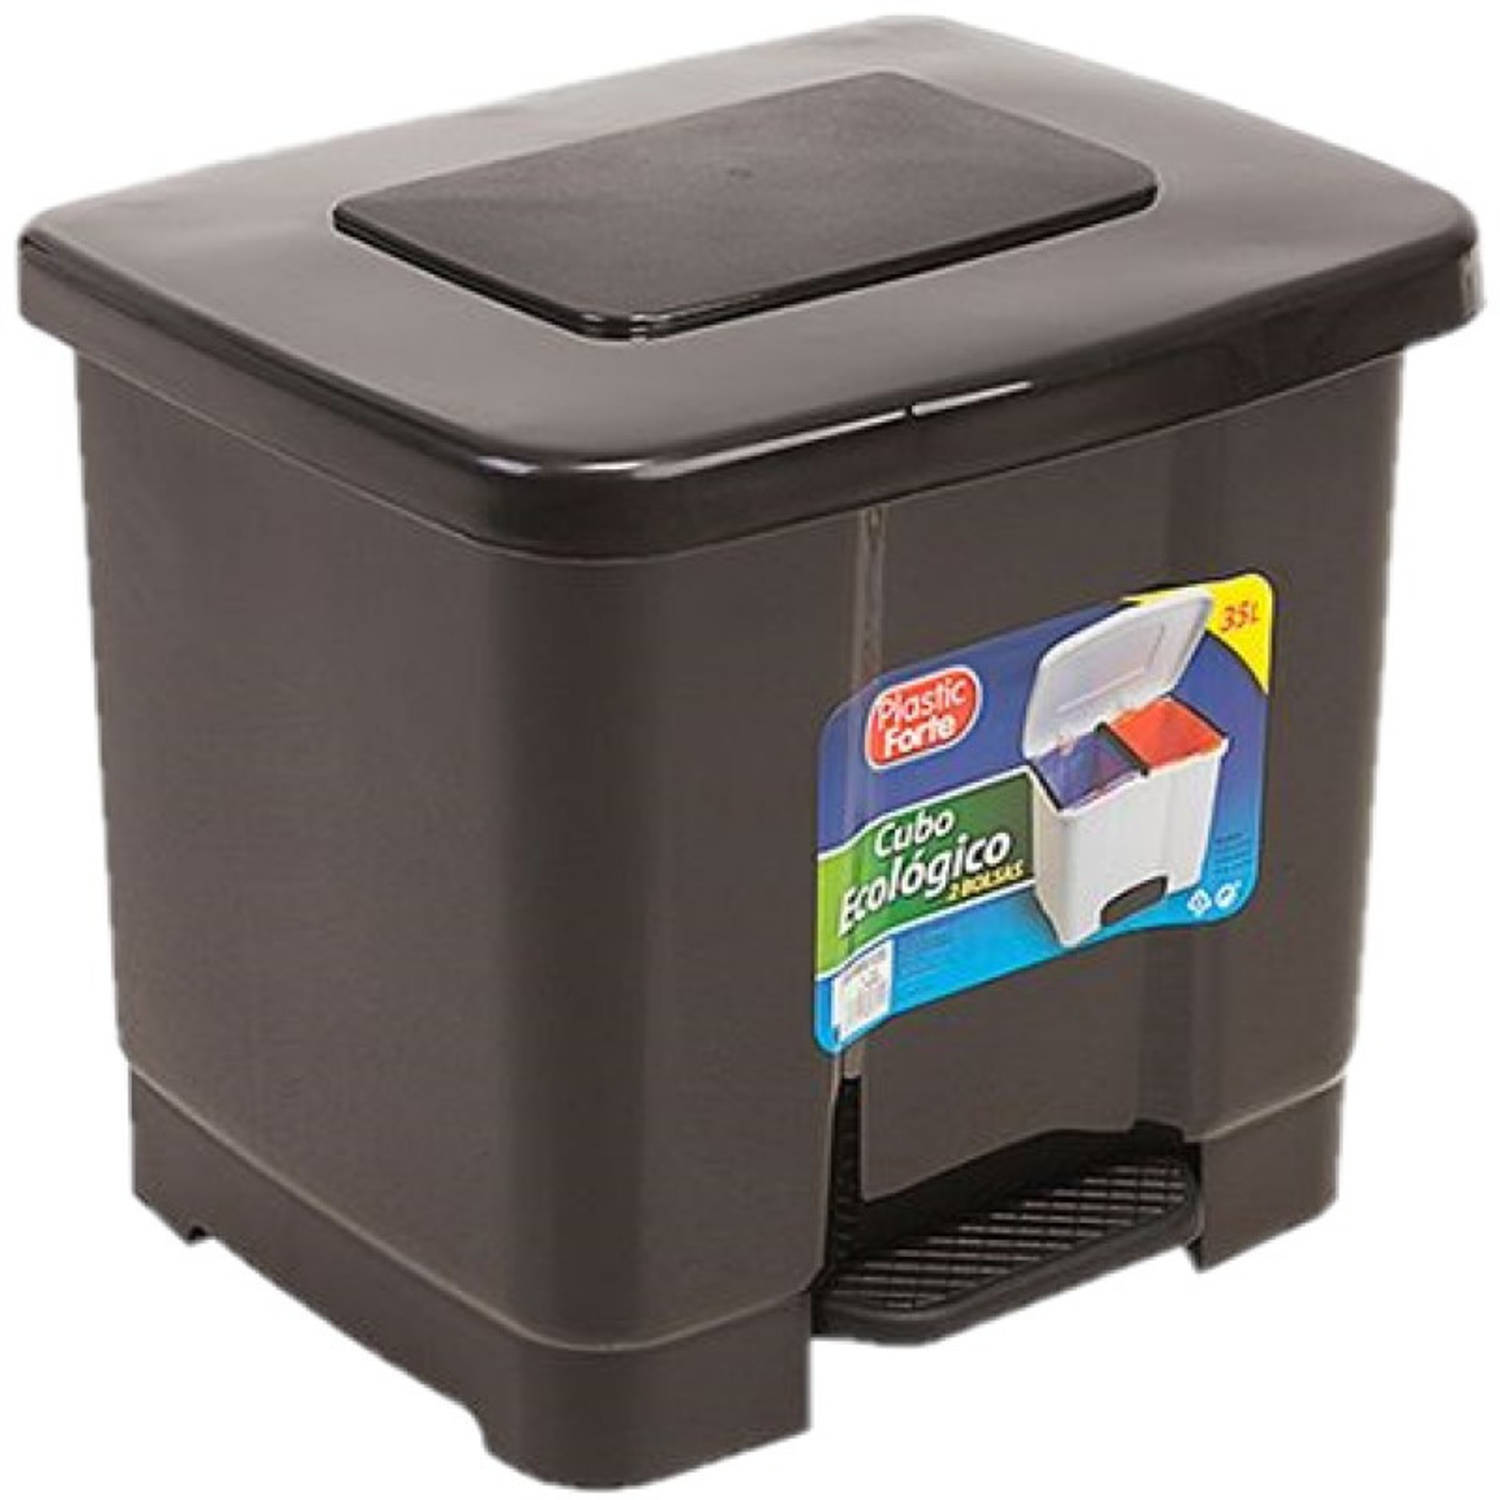 Forte Plastics Dubbele afvalemmer/vuilnisemmer 35 liter met deksel en pedaal - Donkergrijs- vuilnisbakken/prullenbakken - Kantoor/keuken